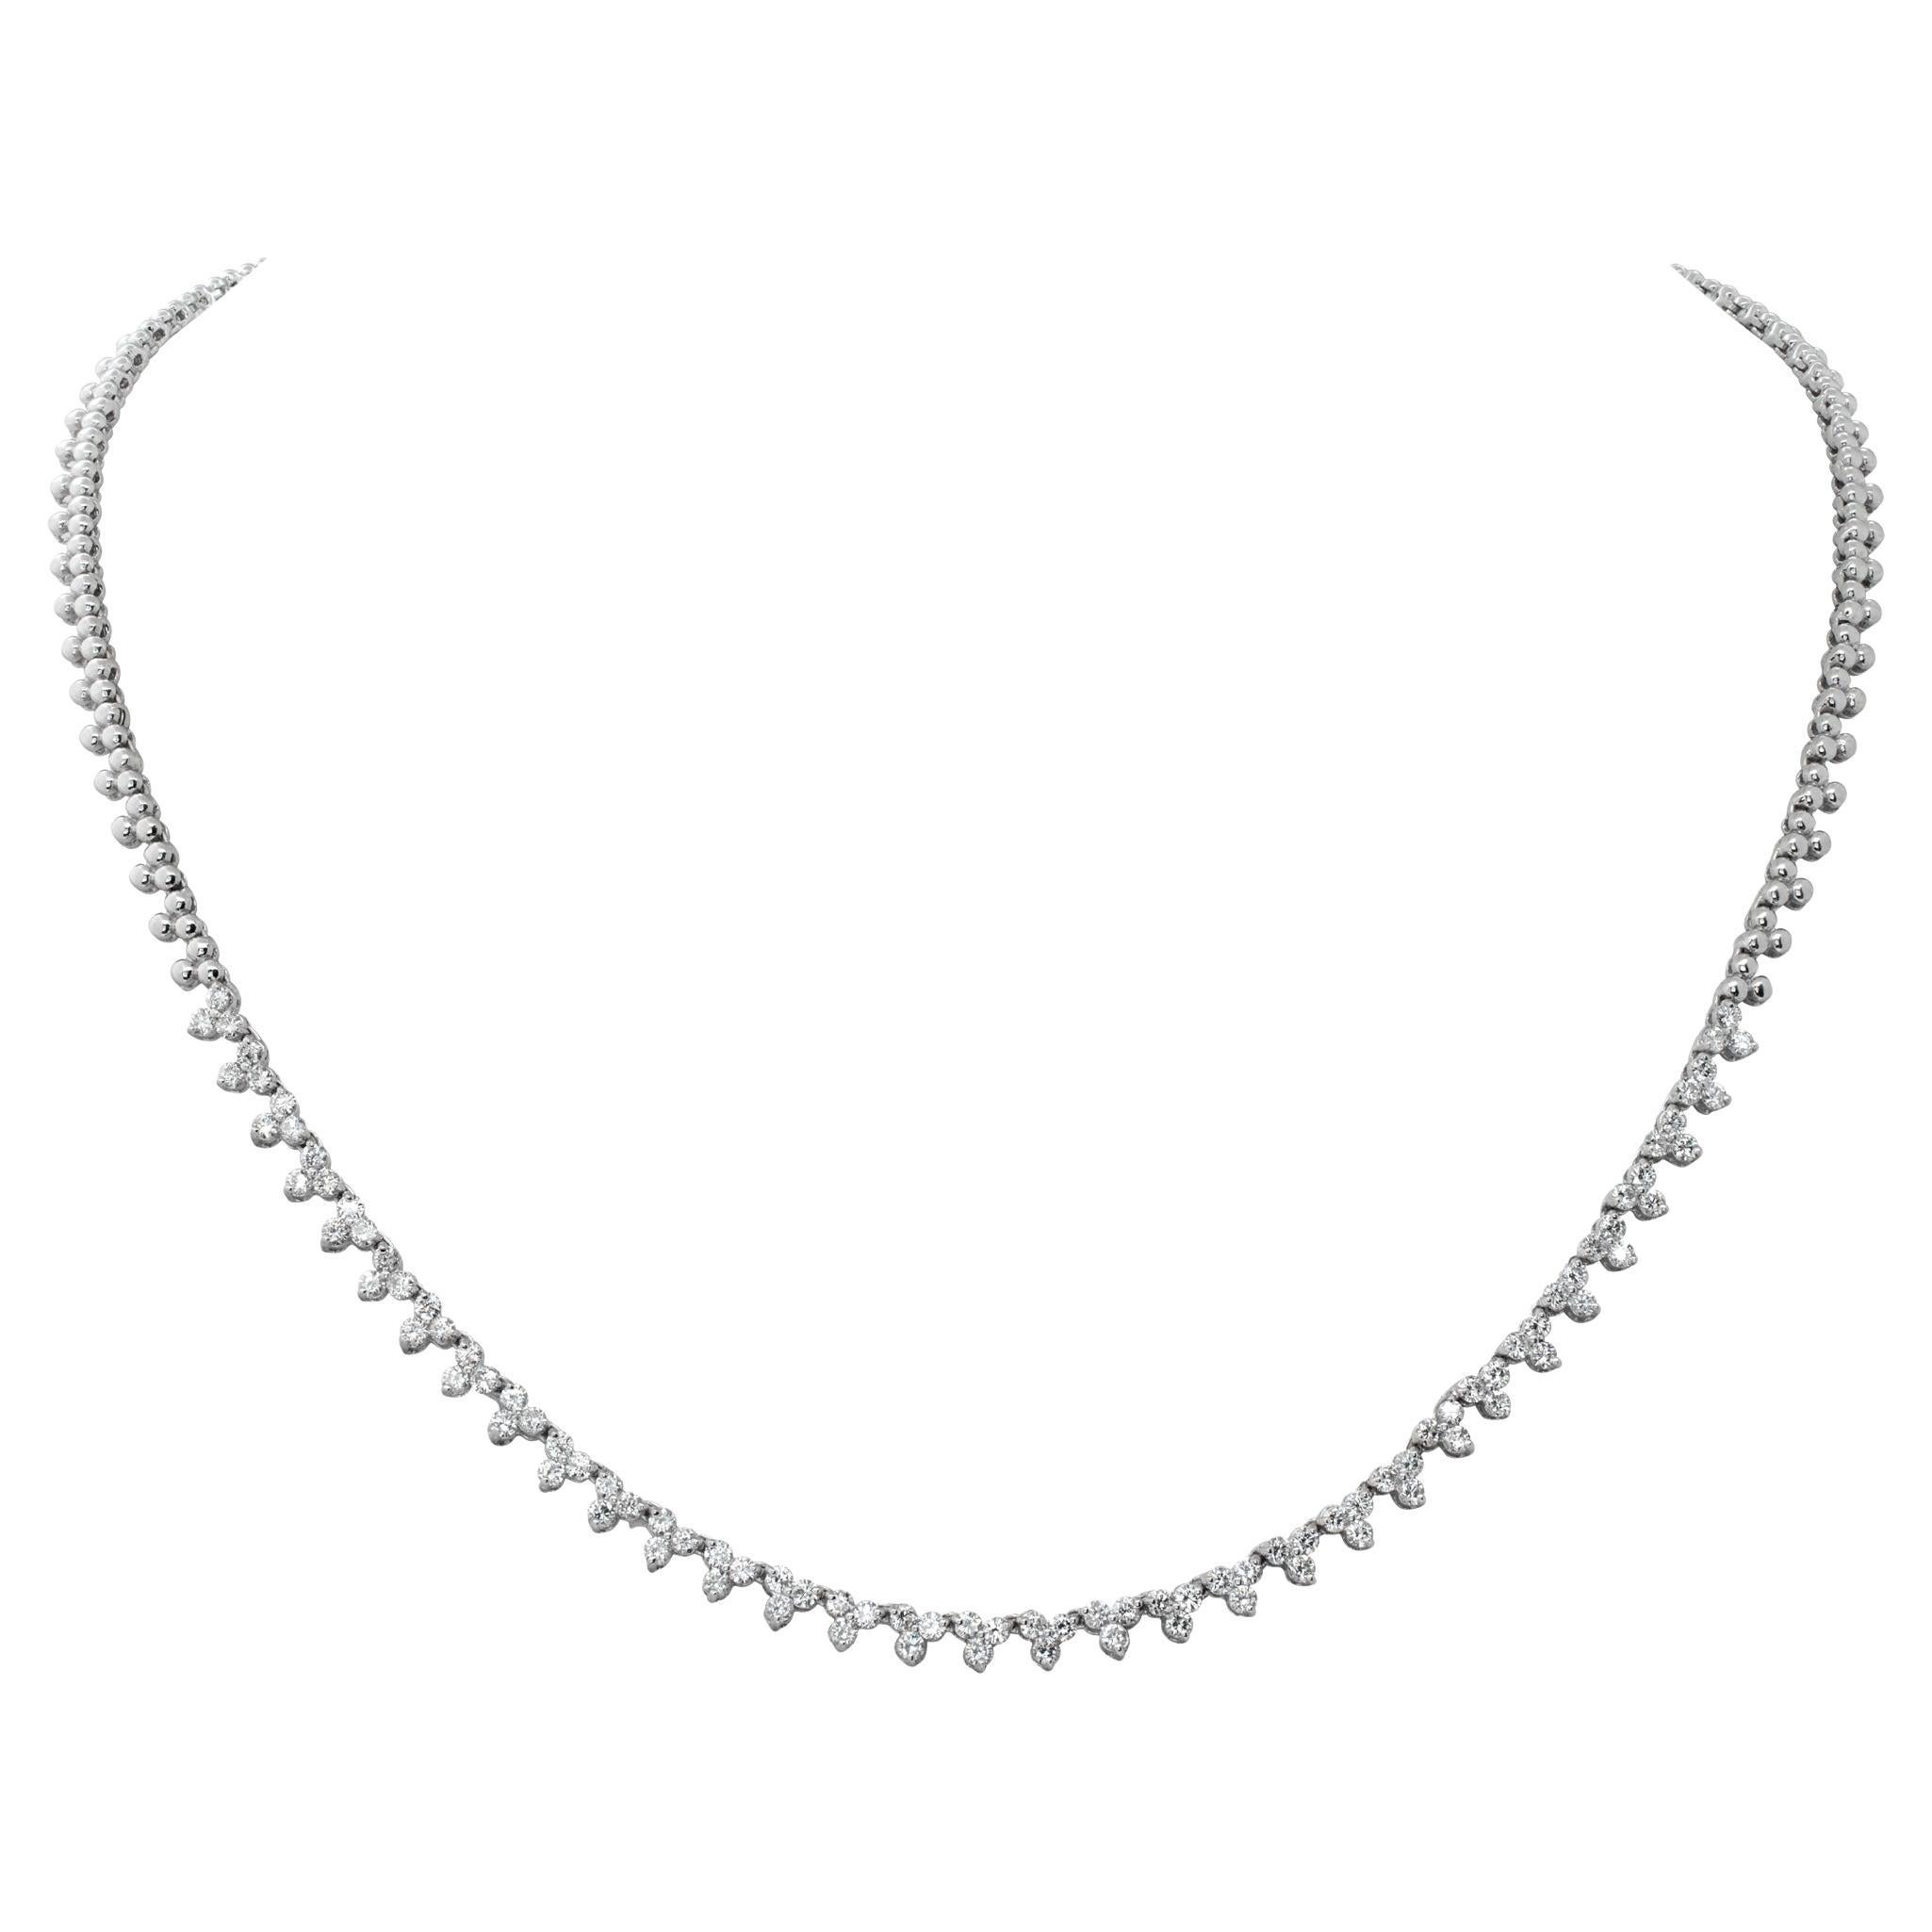 White gold diamond necklace with round brilliant cut diamonds